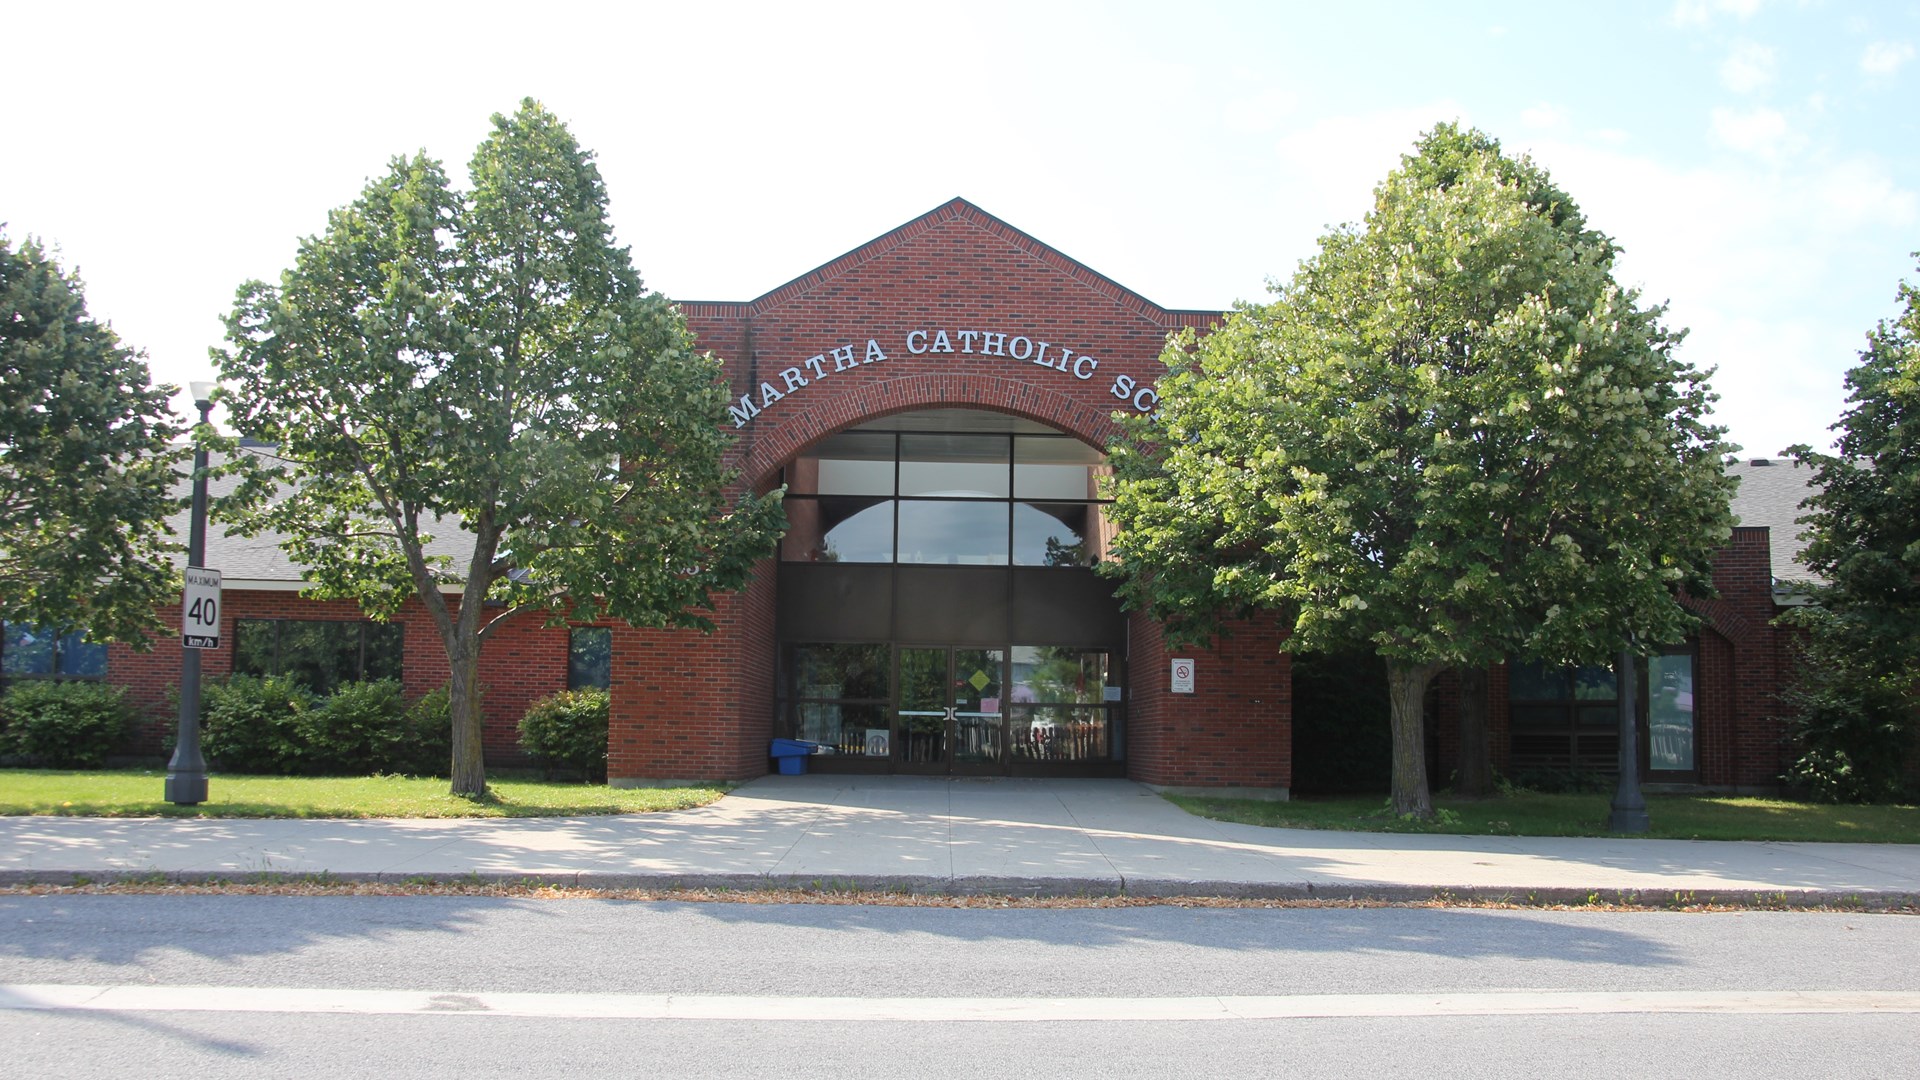 St. Martha Catholic School